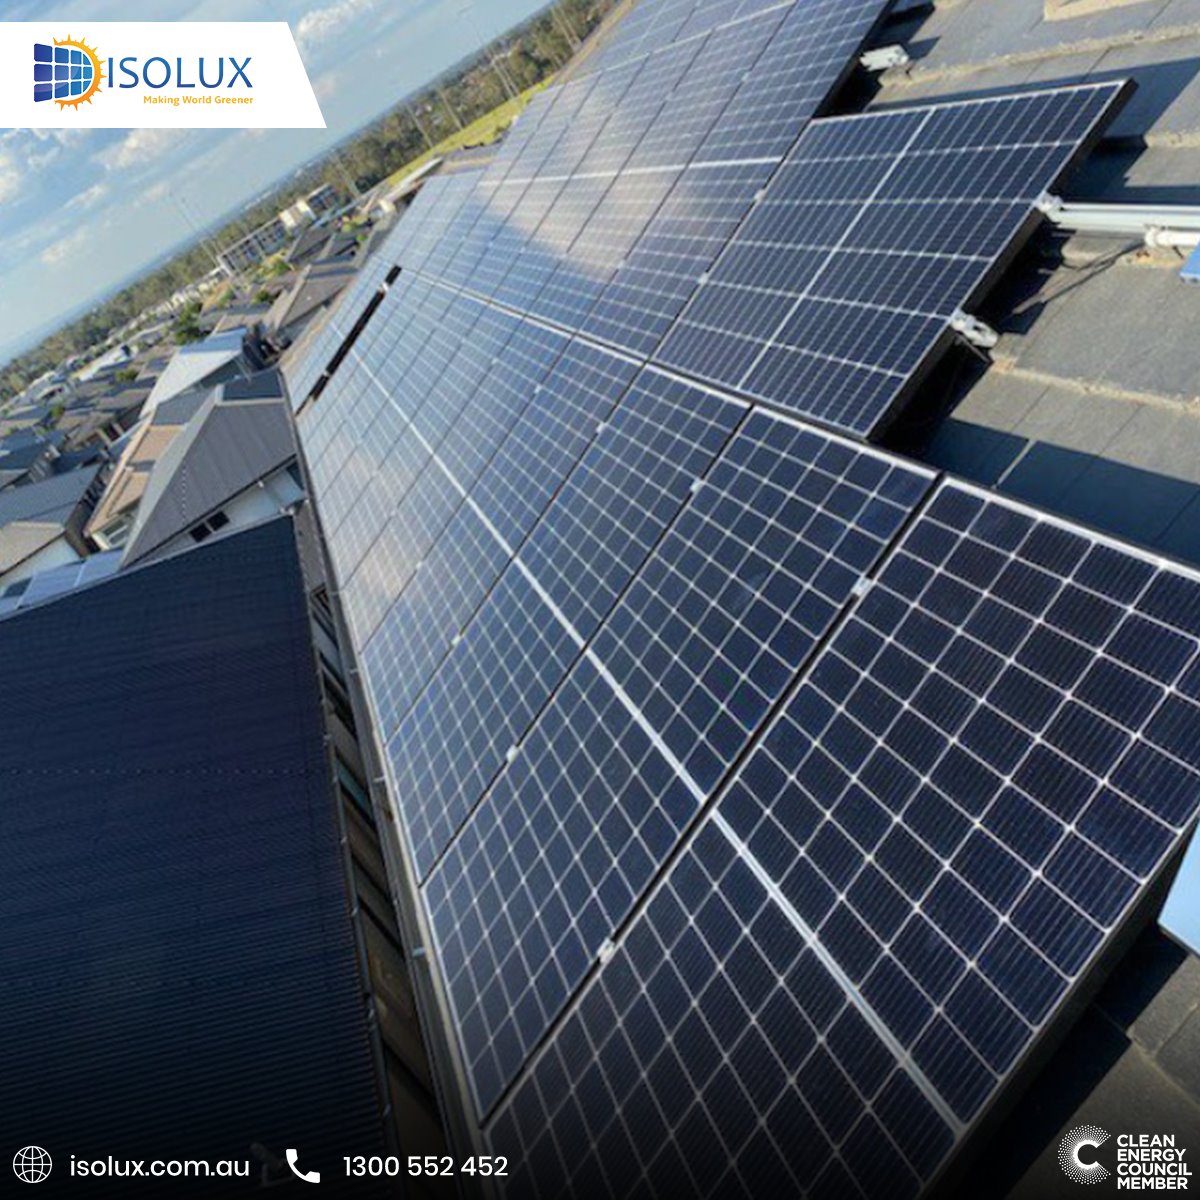 Isolux Solar Power Sydney